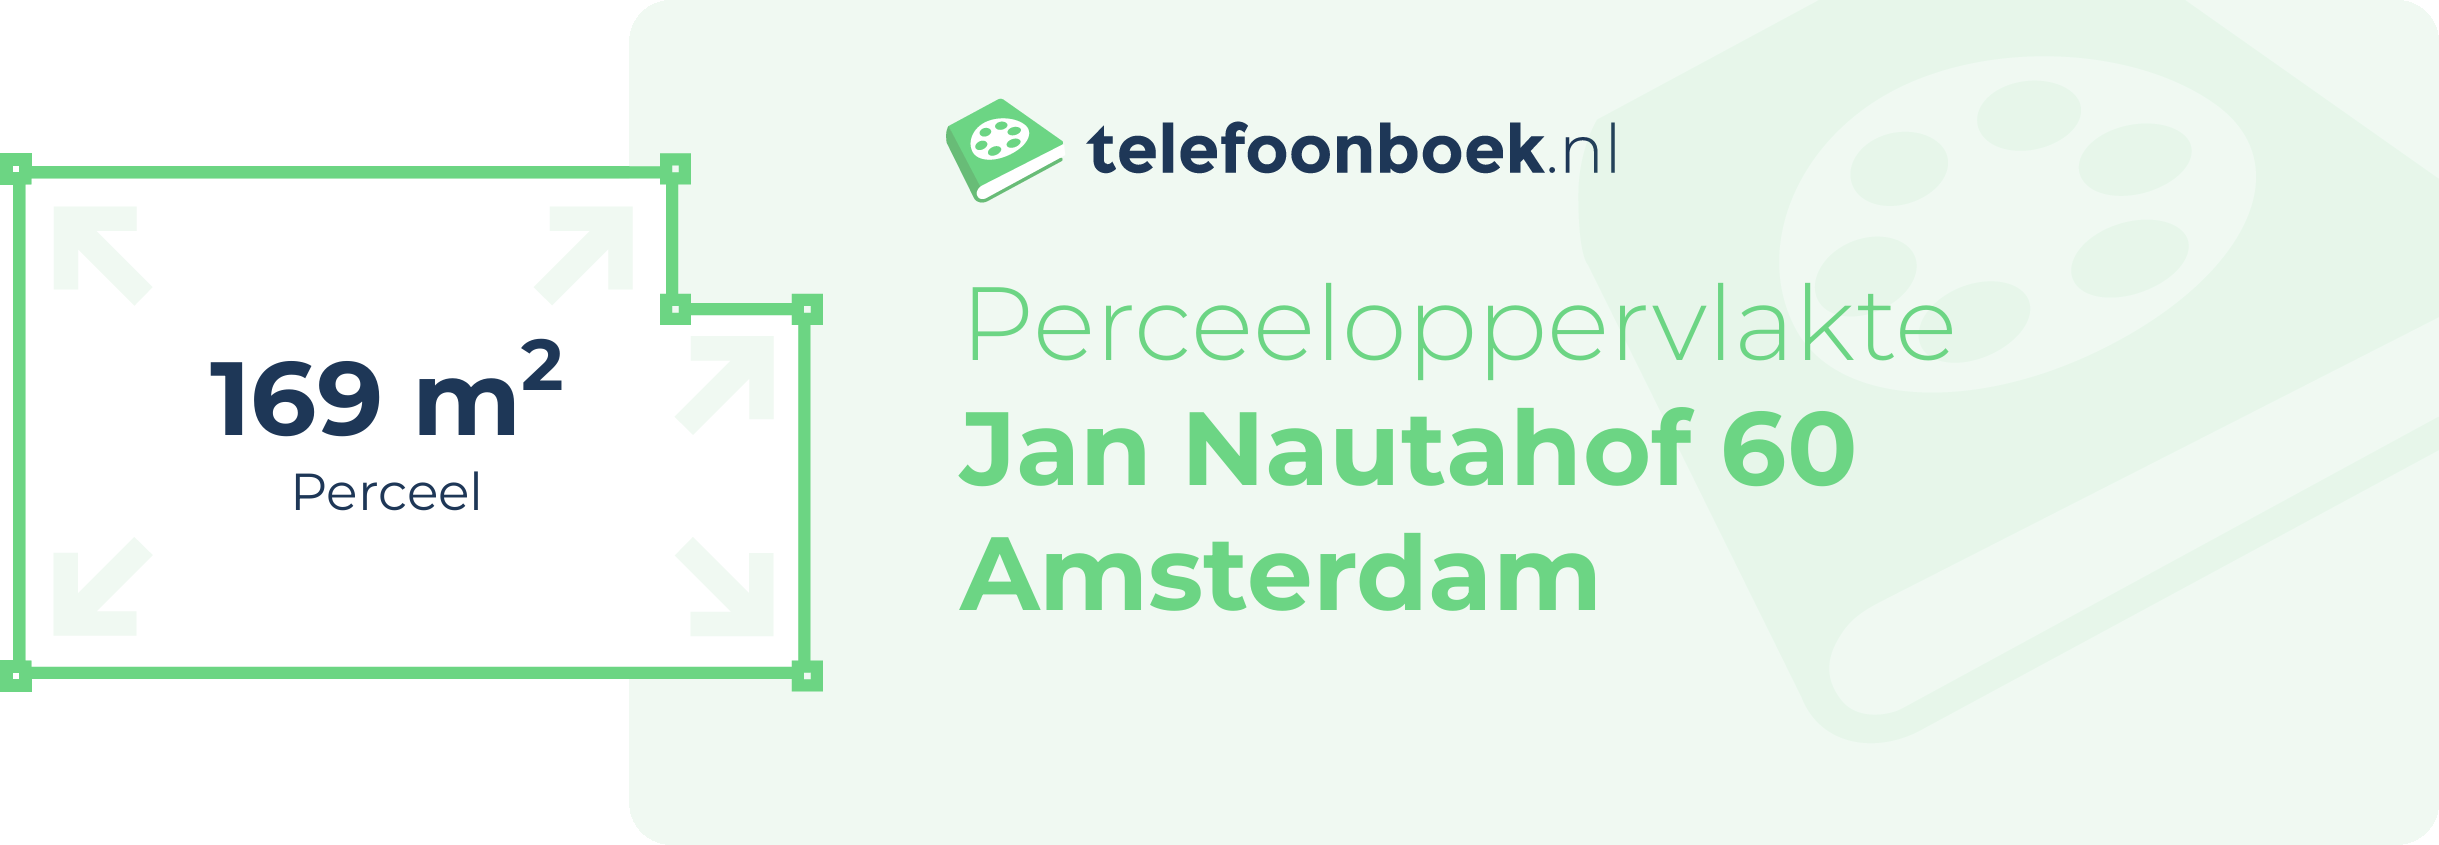 Perceeloppervlakte Jan Nautahof 60 Amsterdam